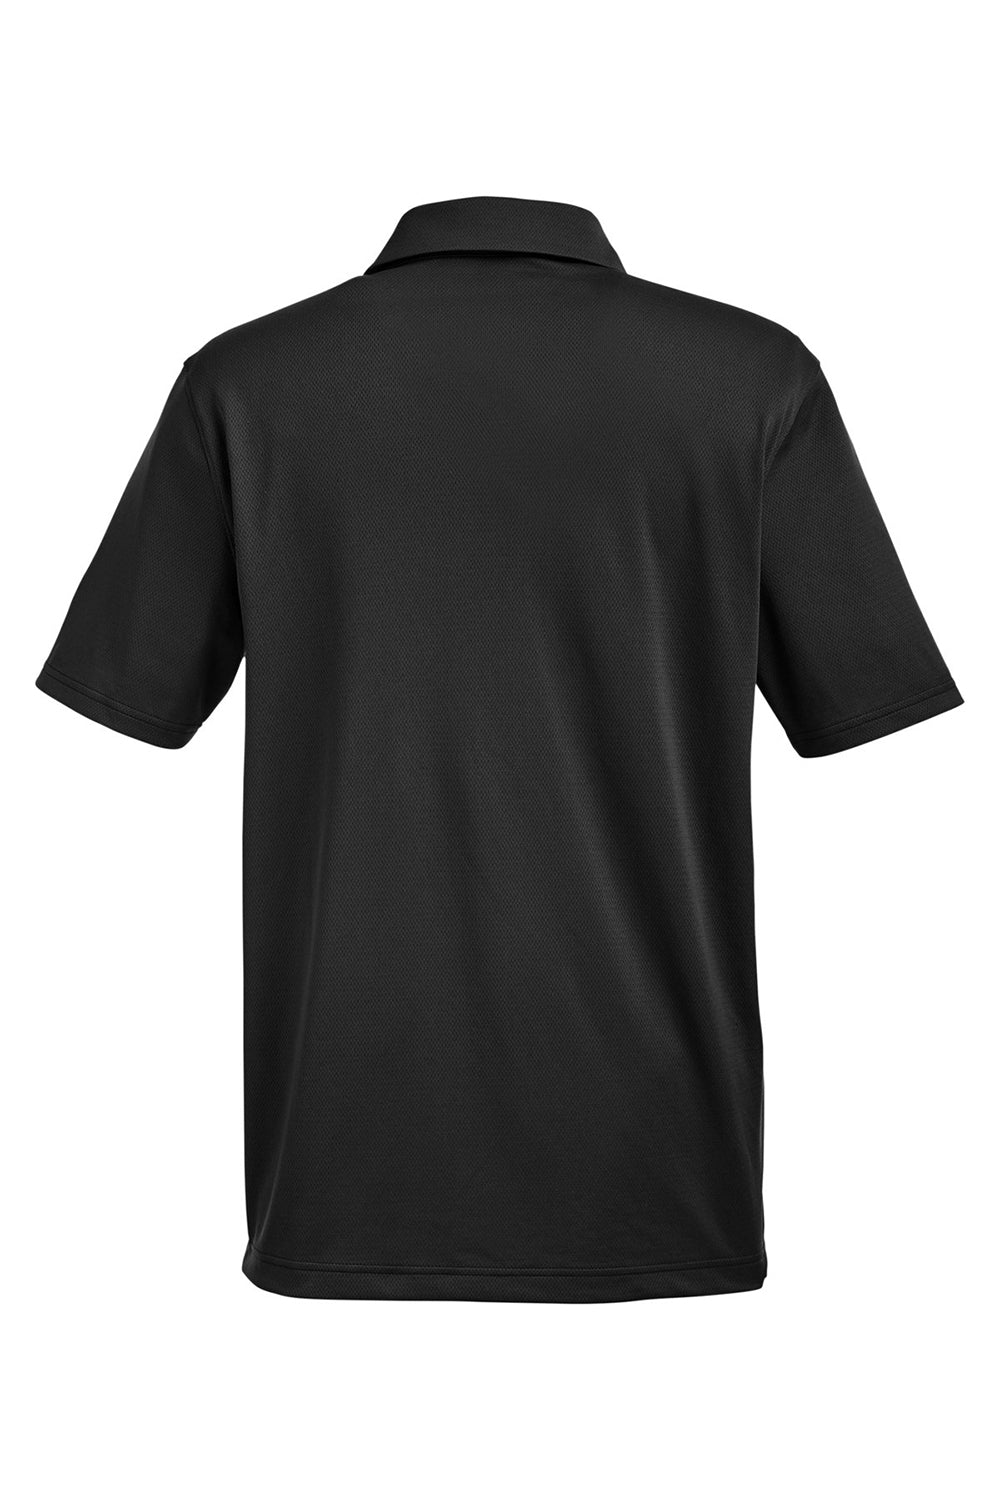 Under Armour 1370399 Mens Tech Moisture Wicking Short Sleeve Polo Shirt Black Flat Back